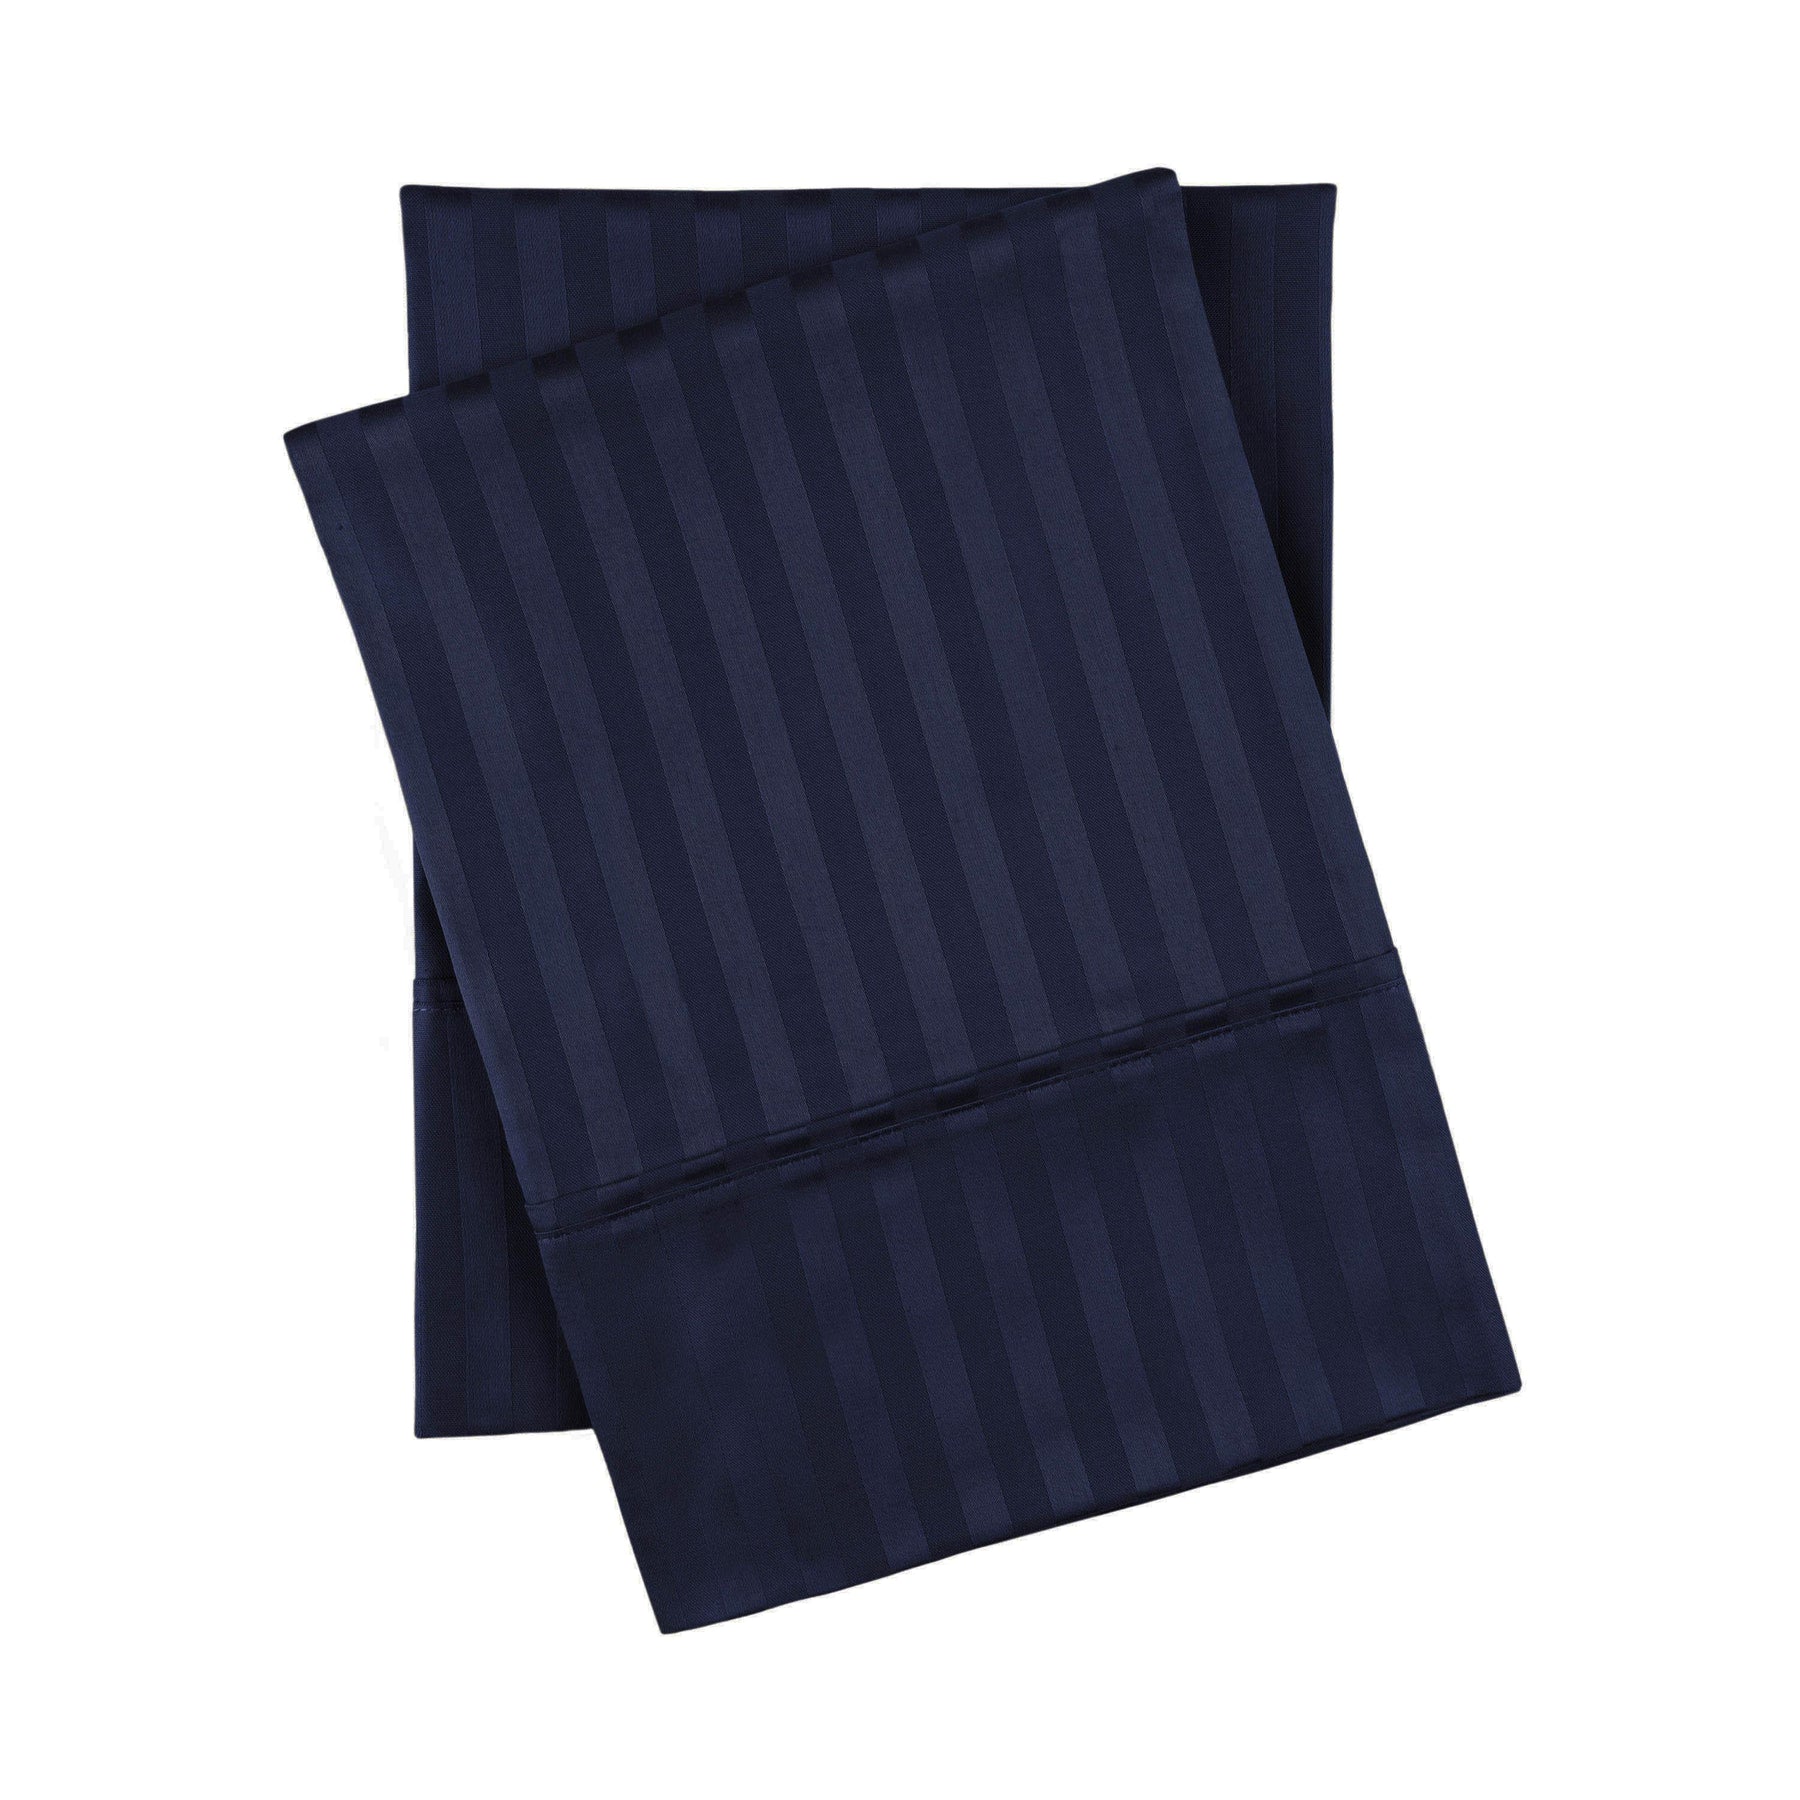 300 Thread Count Soft Egyptian Cotton Pillowcase Set - Navy Blue